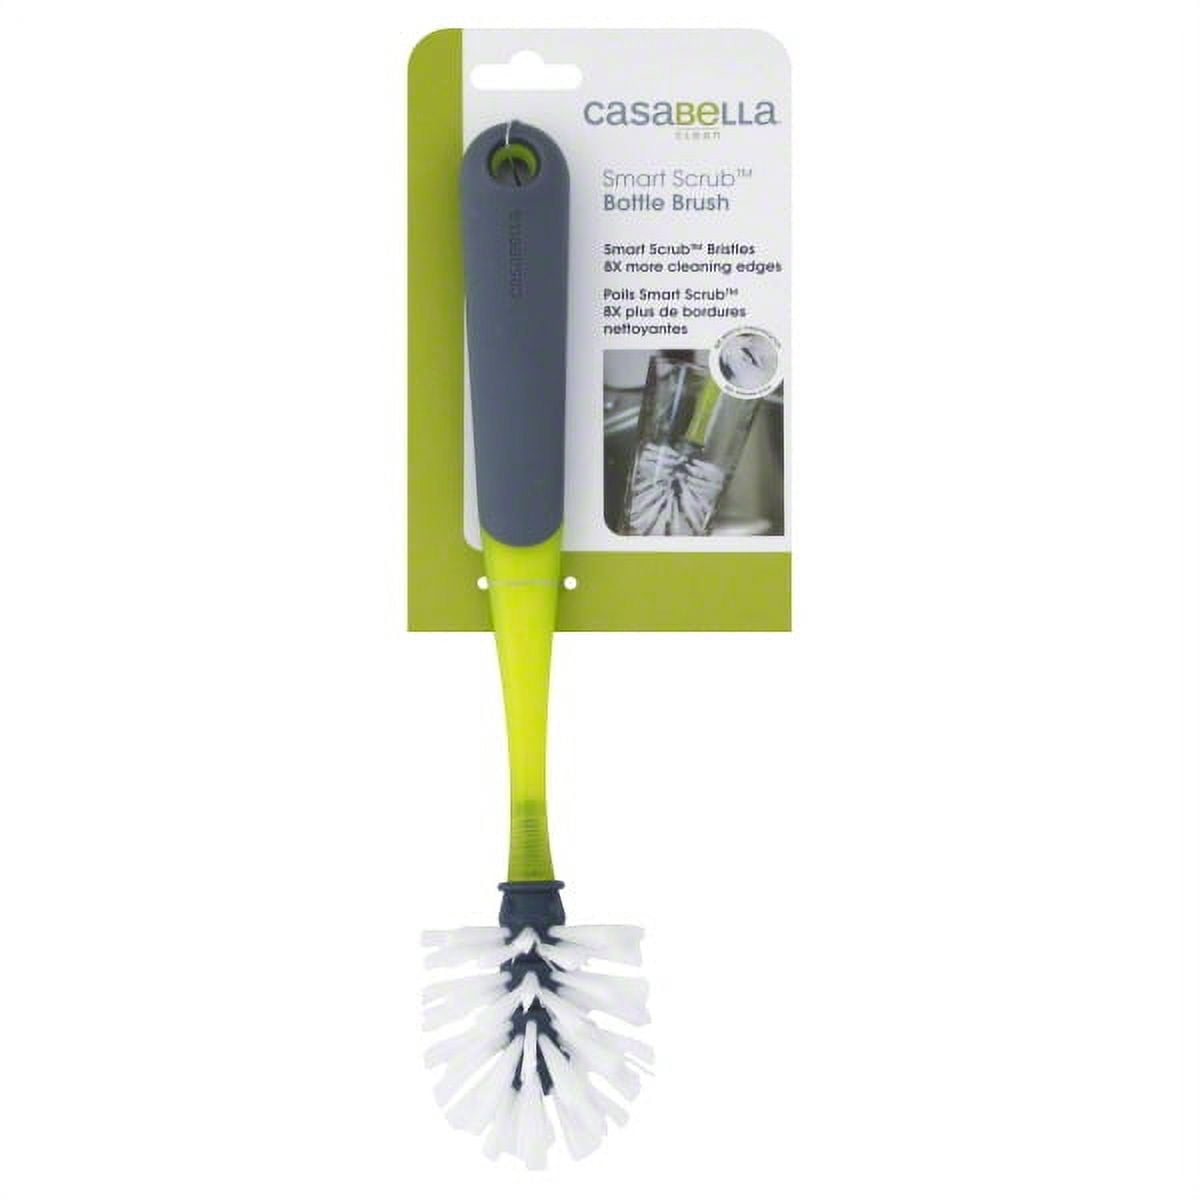 Casabella Swivel Brush - 028484156518